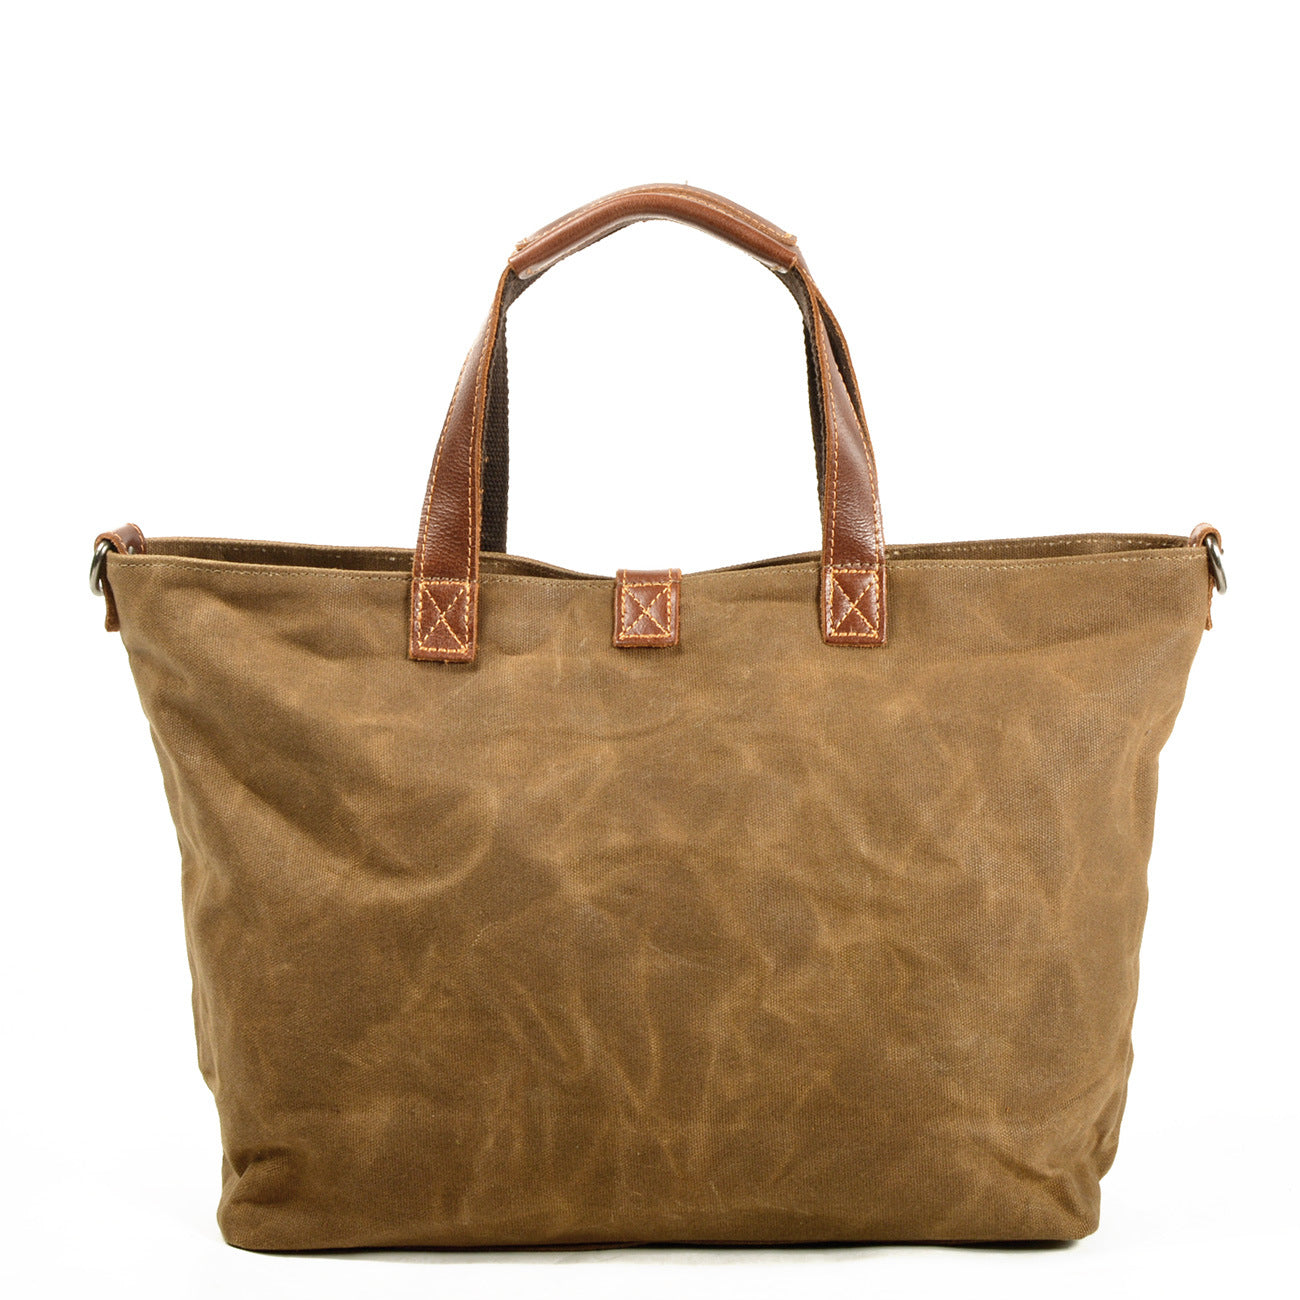 Vintage Waxed Canvas Tote Handbags for Women 9706-Handbags-Khaki-Free Shipping Leatheretro